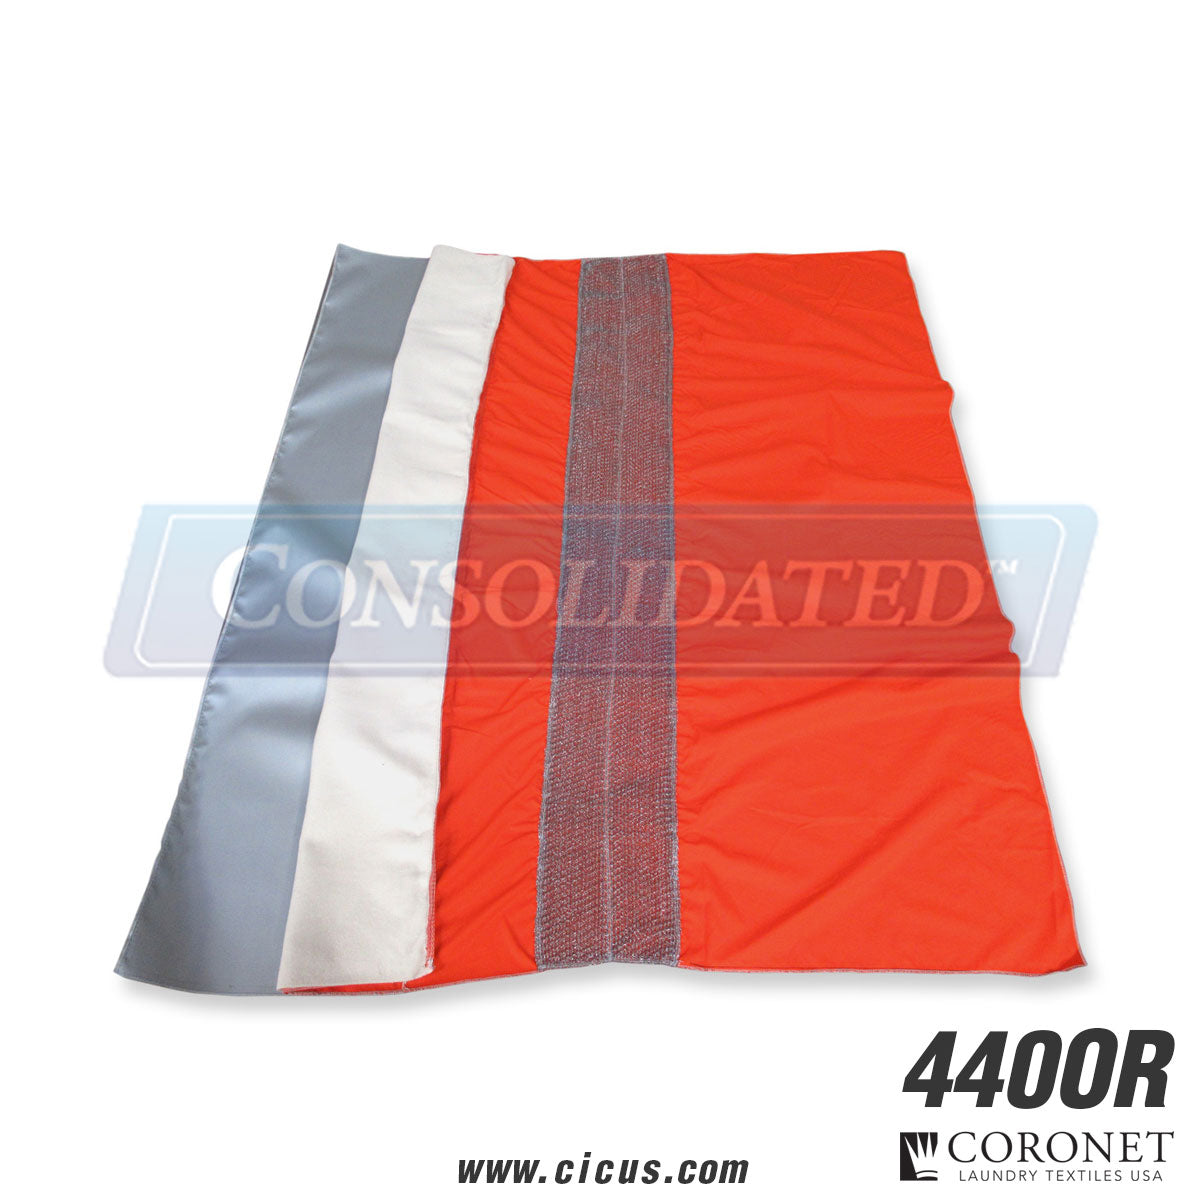 Ironer Wax Cloth - High Temp Nomex & Silicone, 72" x 120" [4400R]